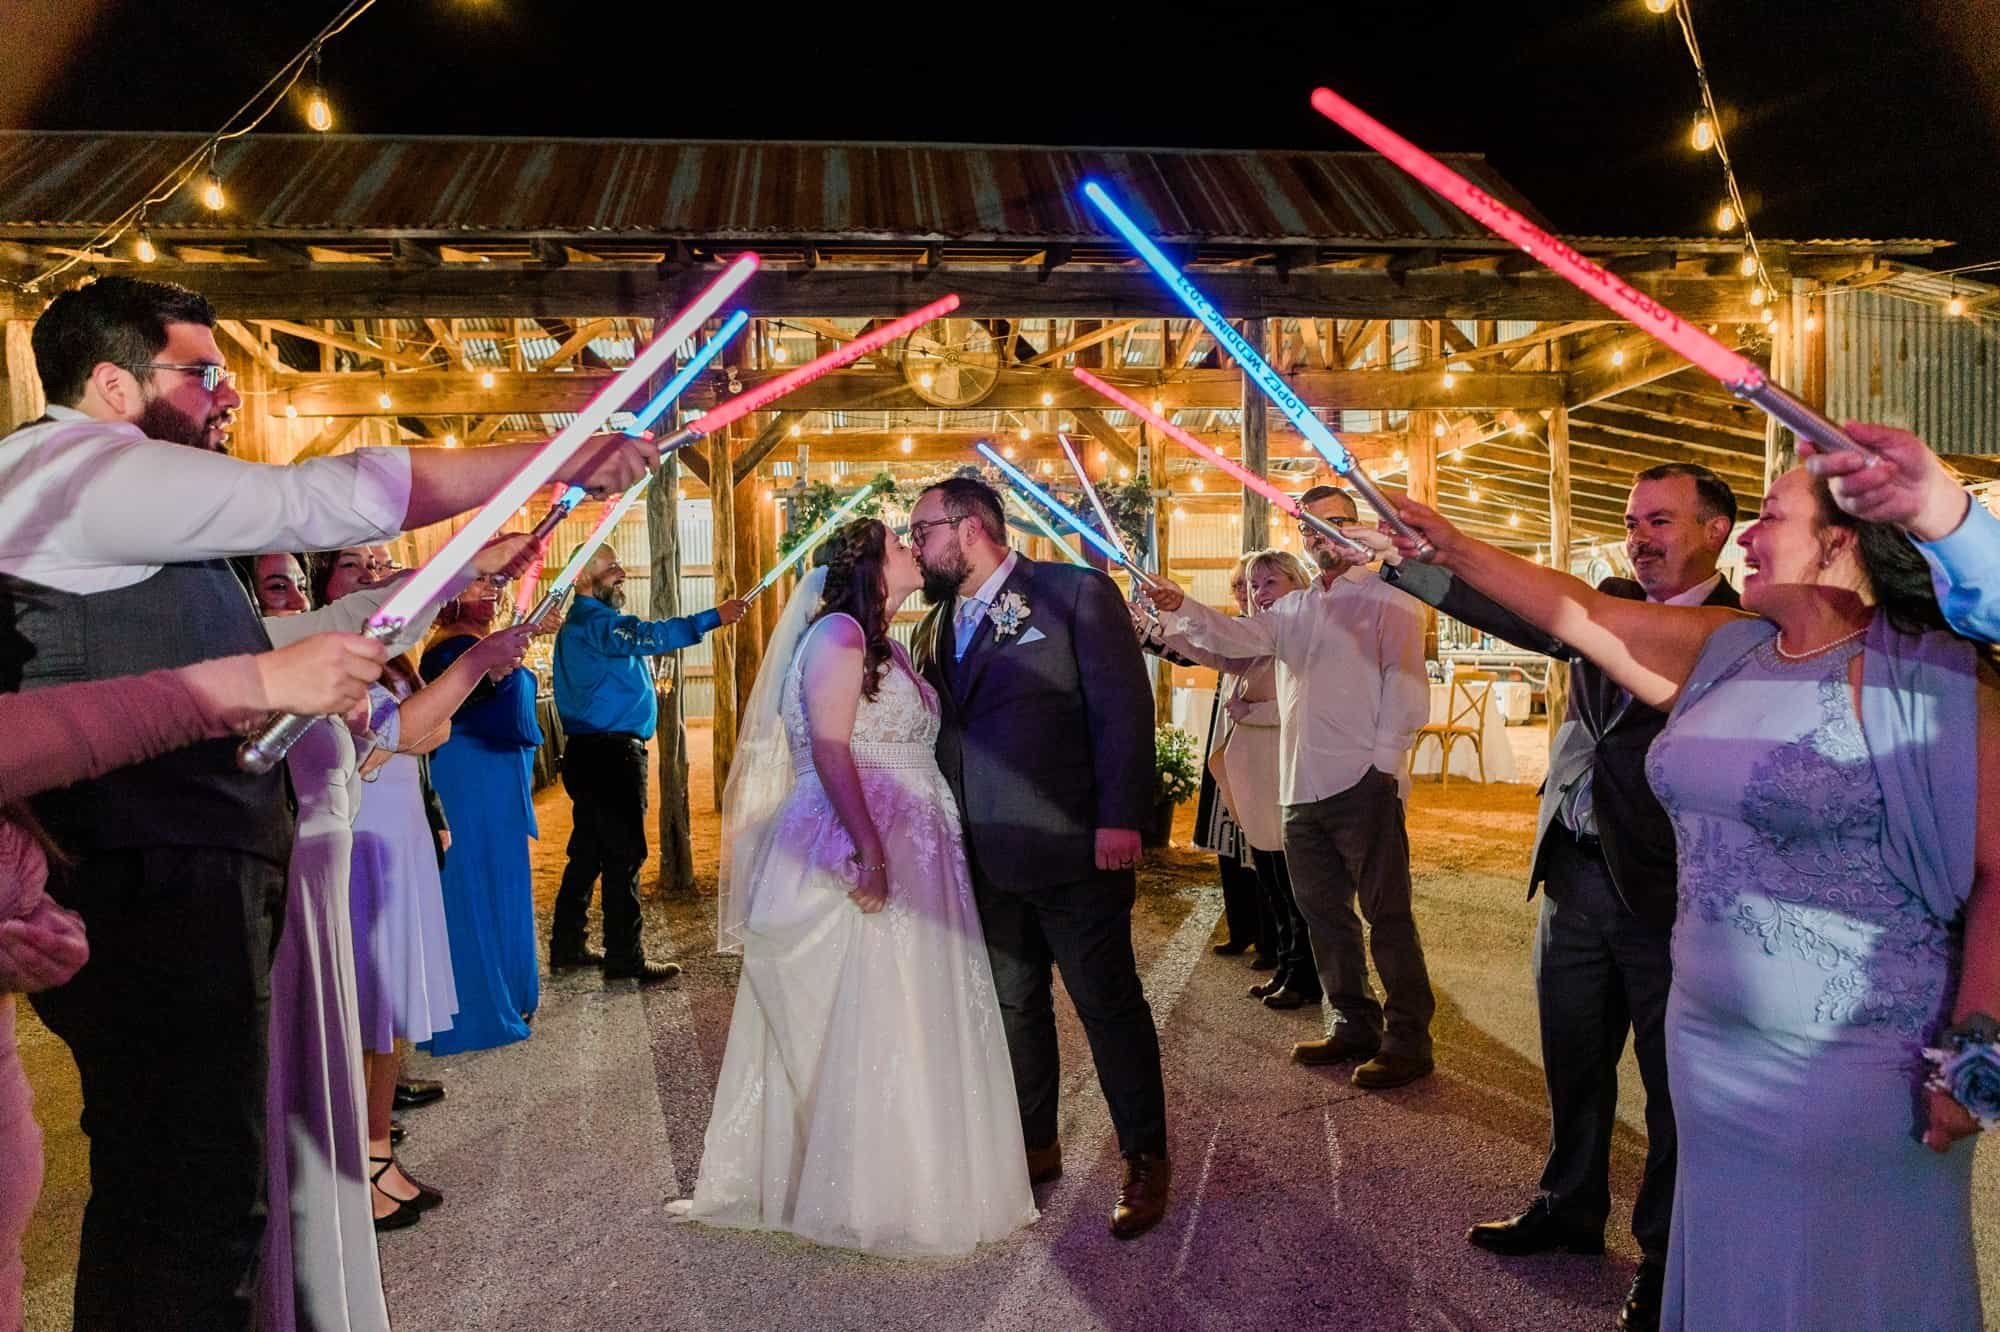 lightsaber wedding reception send off